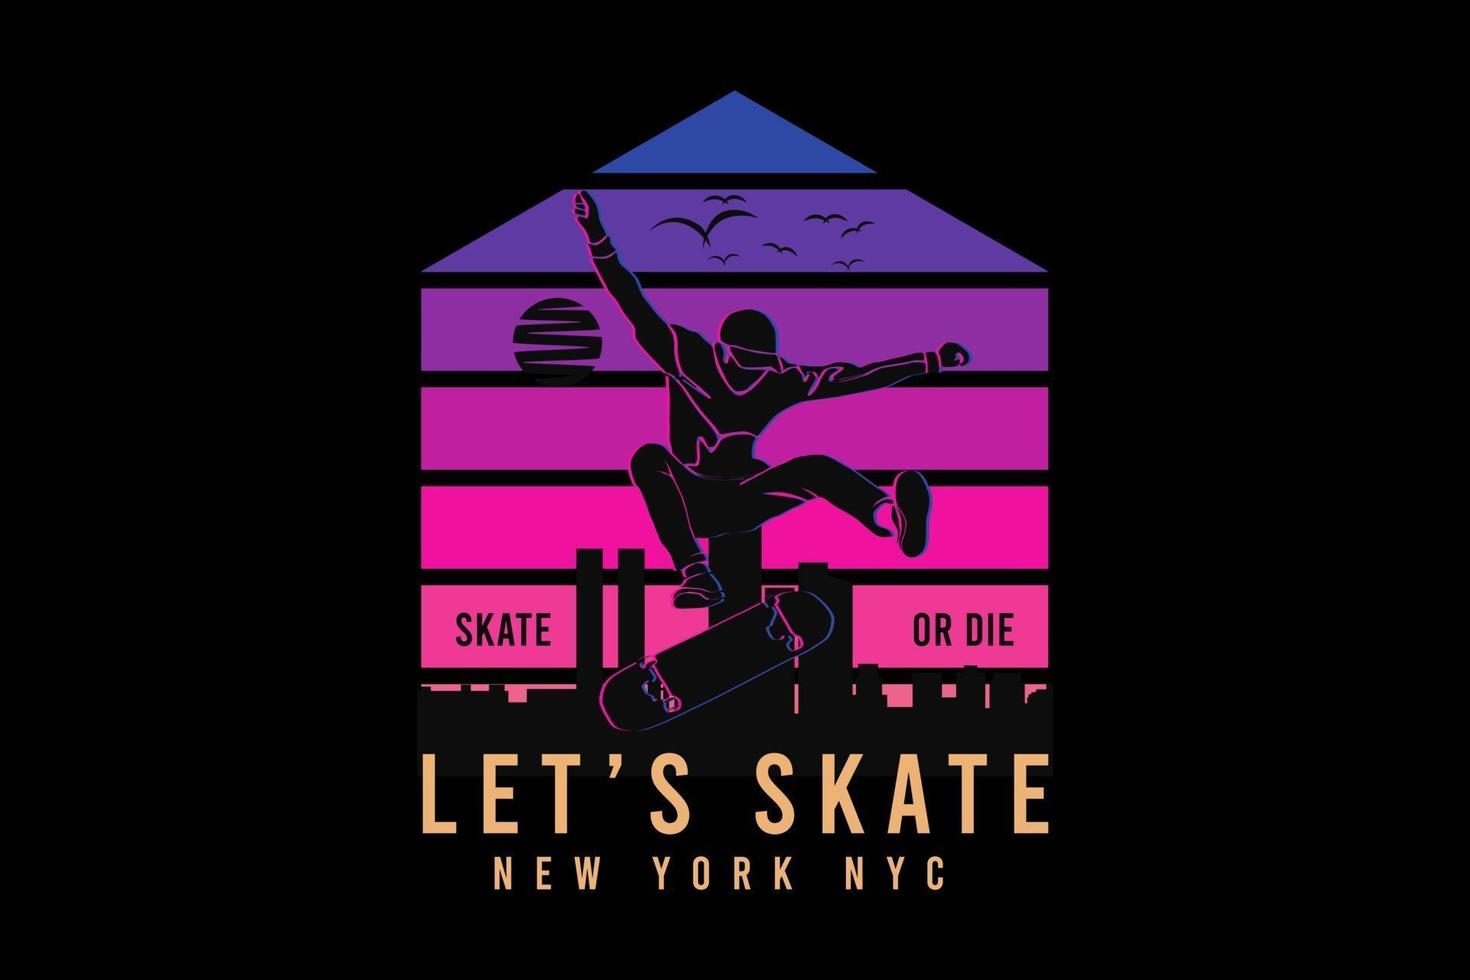 laten we skaten in new york new york city, t ontwerp silhouet retro stijl vector